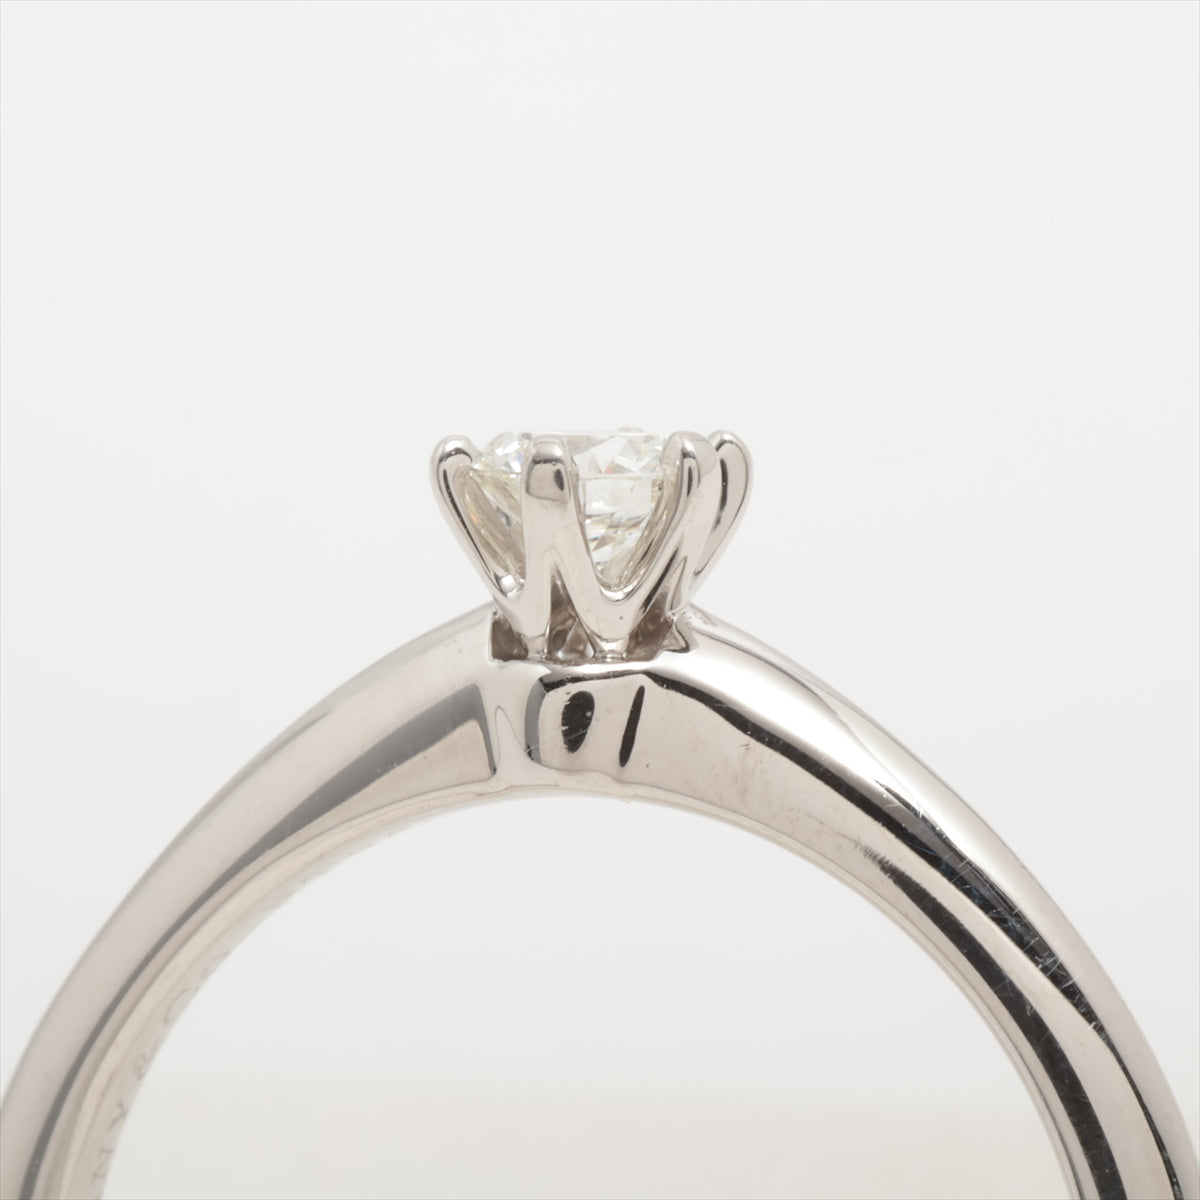 Tiffany Solitaire diamond ring Pt950 3.7g 0.18 Lt